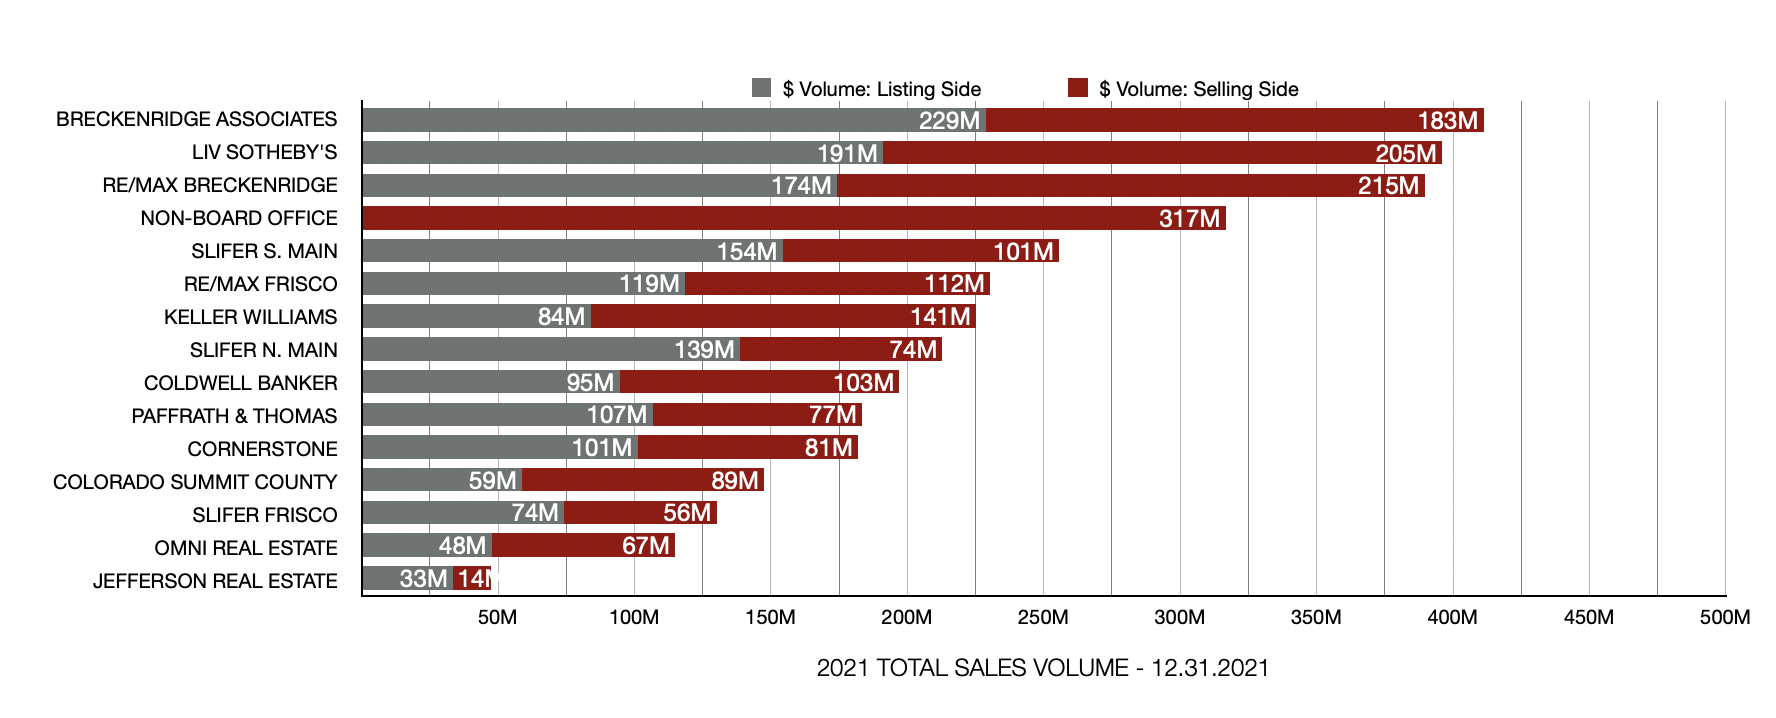 2021 - Full Year, Dec. 31, 2021 sales comparison between real estate offices for Breckenridge, Colorado